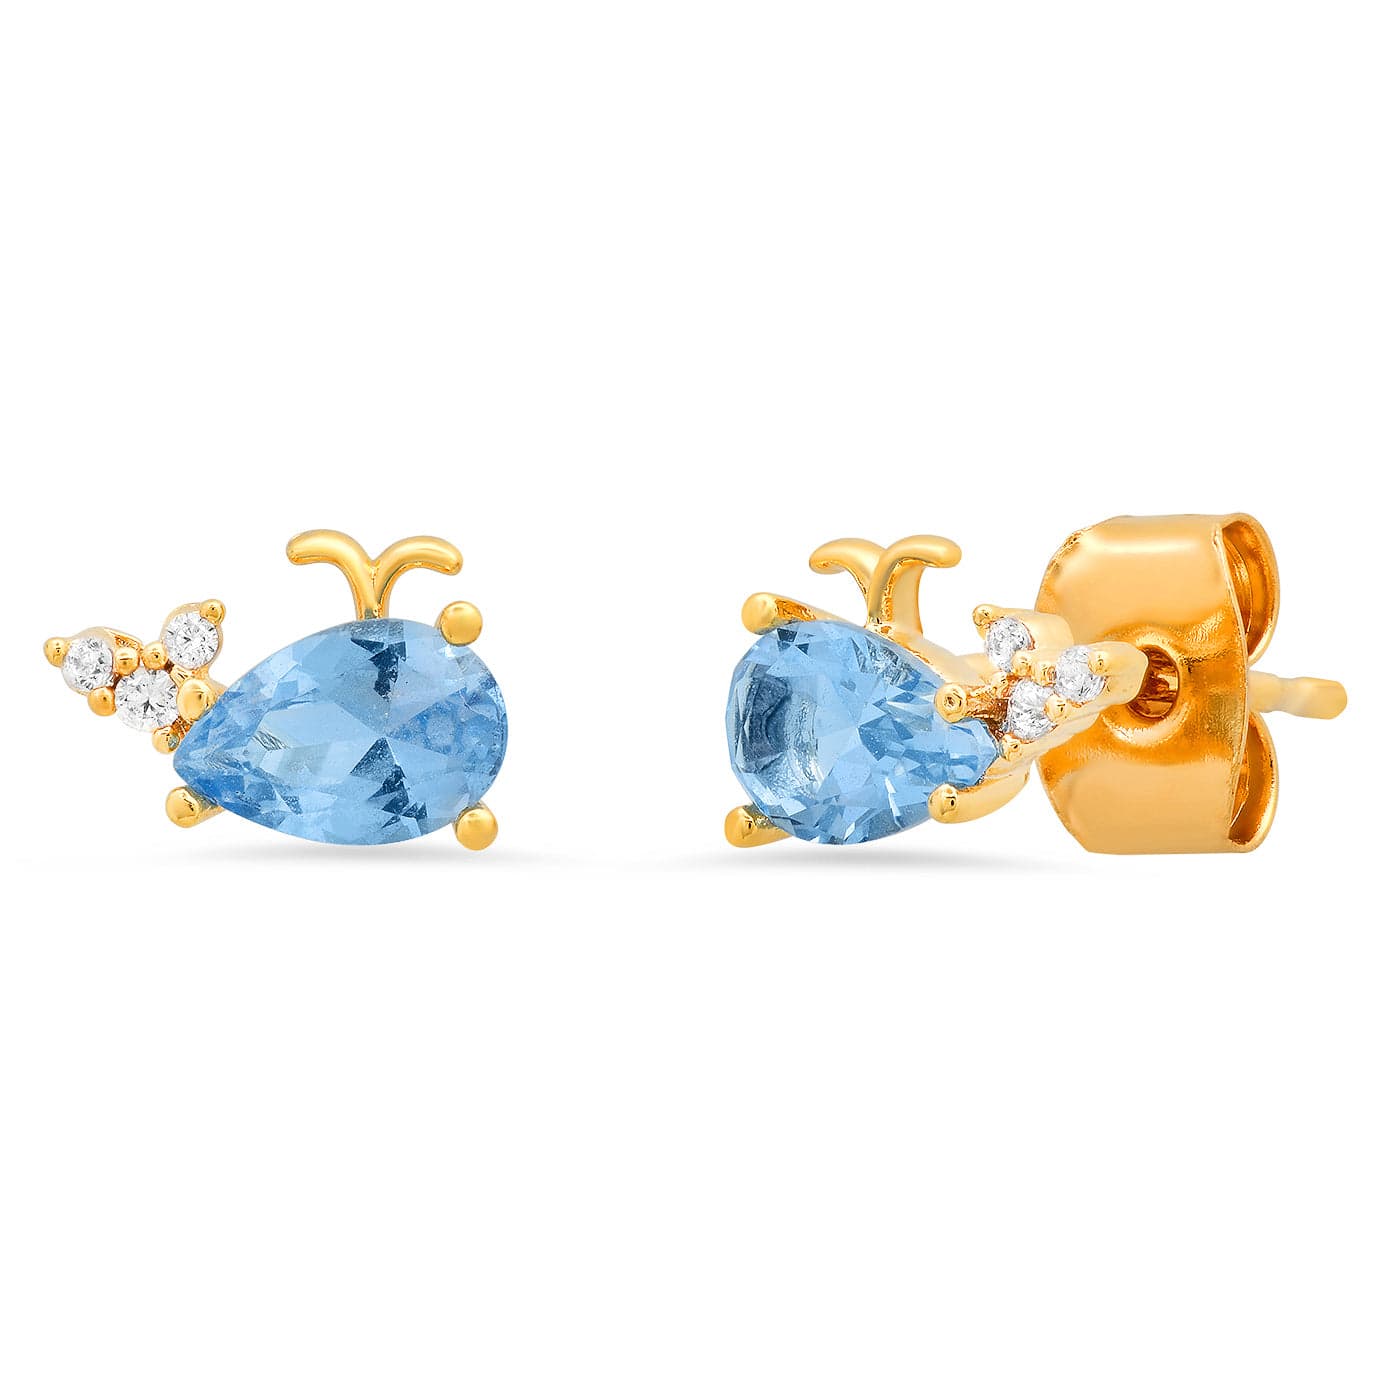 TAI JEWELRY Earrings Whale Crystal Studs